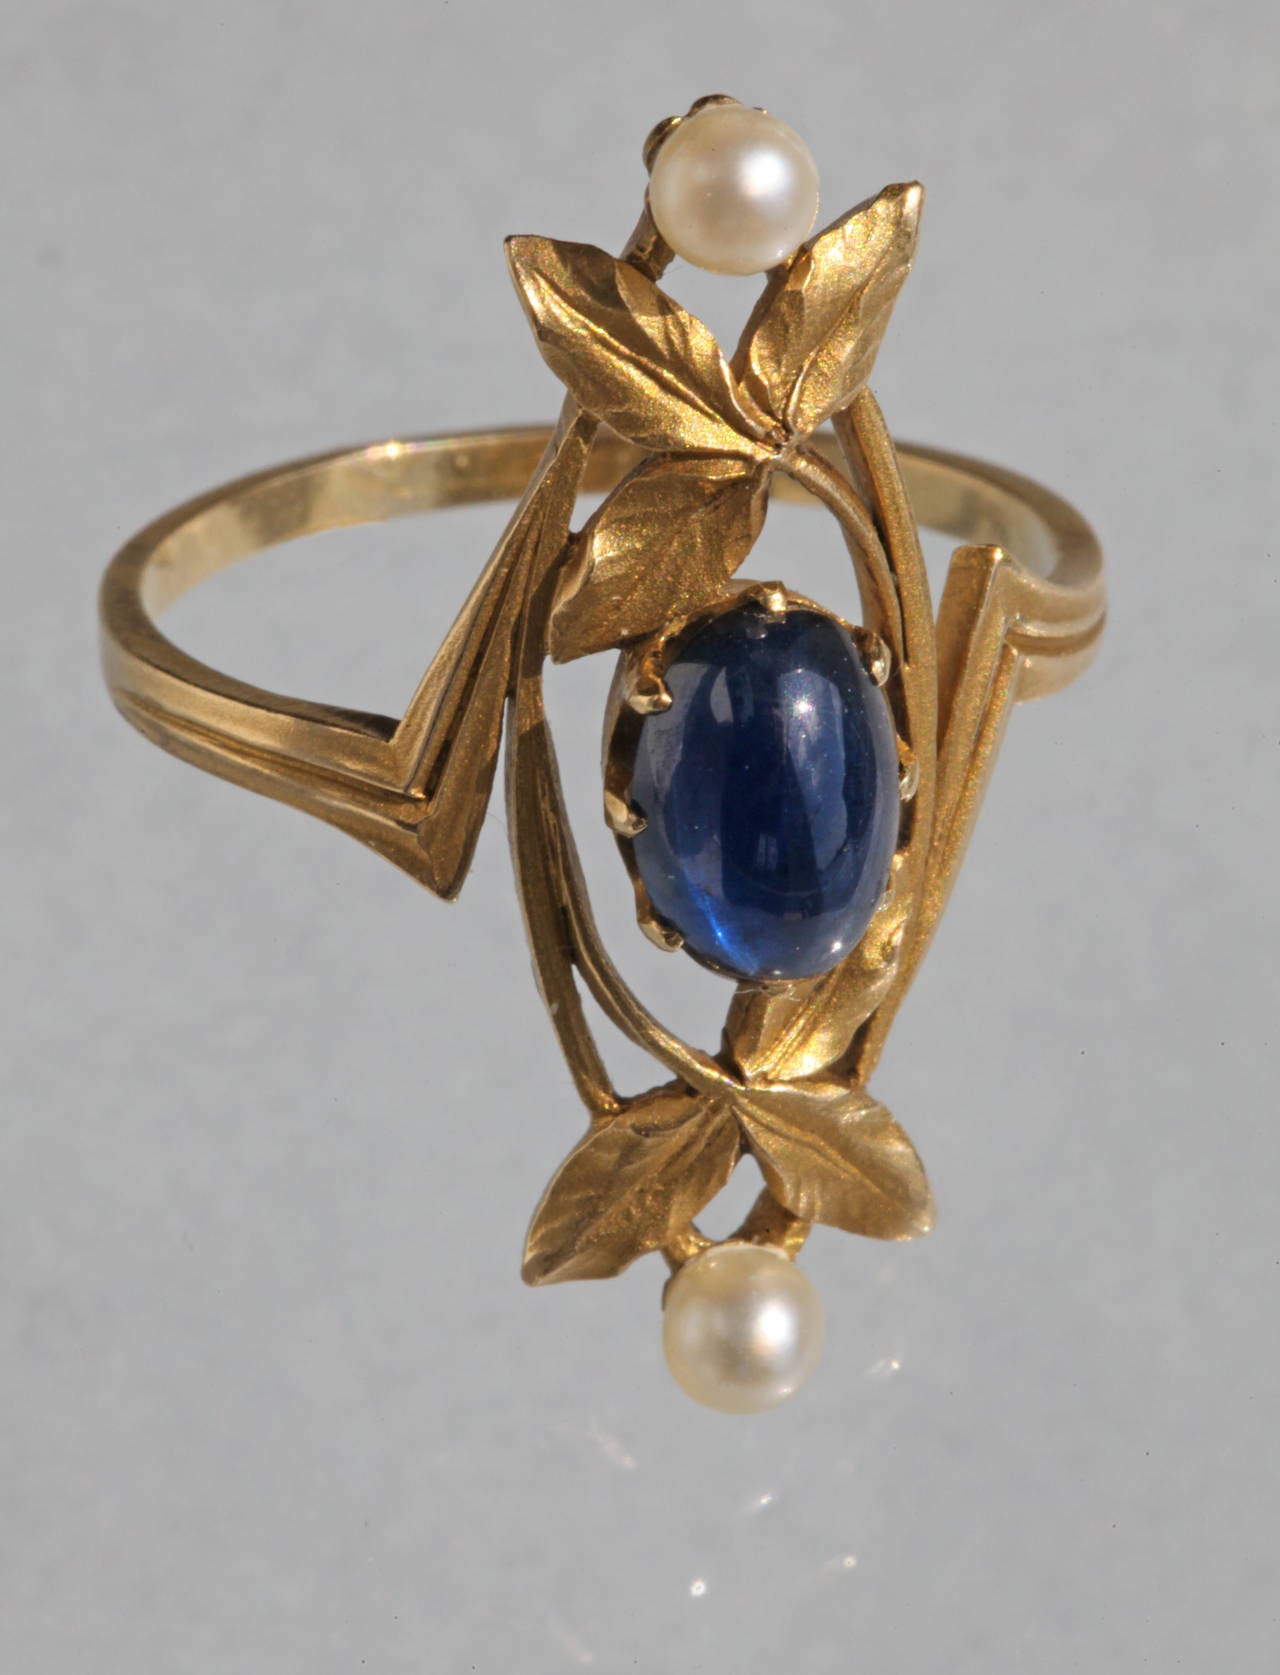 Beautiful Art Nouveau Floral Ring by Gaston-Eugene-Omar Lafitte.
Maker's mark 'GL' & palette. Eagle's head. Numbered '2378'
Ring Size:  UK:O  US:7.25  EU:55.1  Asia:14.5